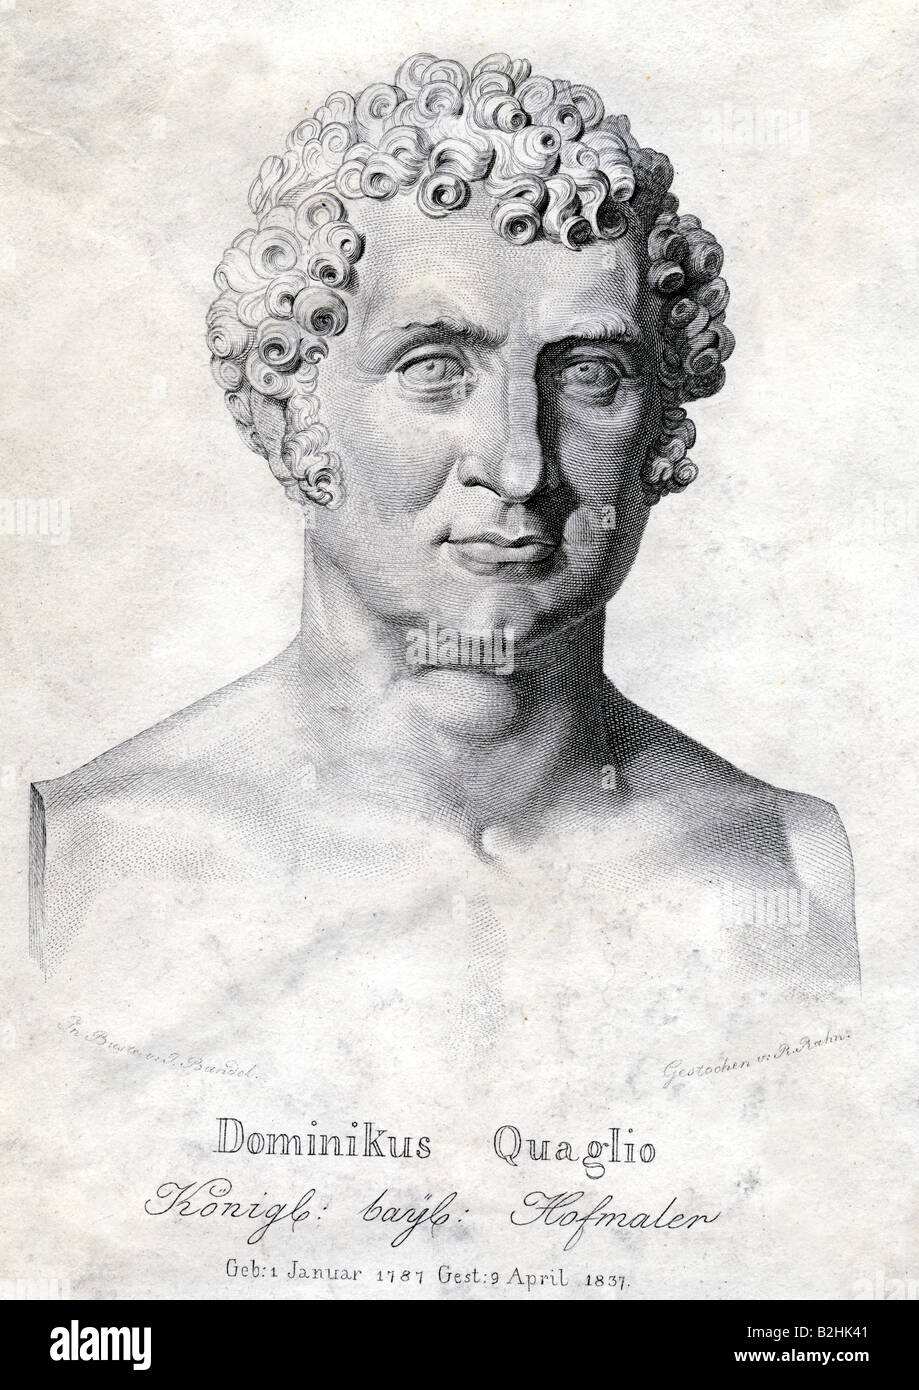 Quaglio, Domenico (Dominikus), 1.1.1787 - 9.4.1837, German painter and engraver, portrait, engraving by Rudolf Rahn, after bust by Joseph Ernst von Bandel, 19th century, Stock Photo